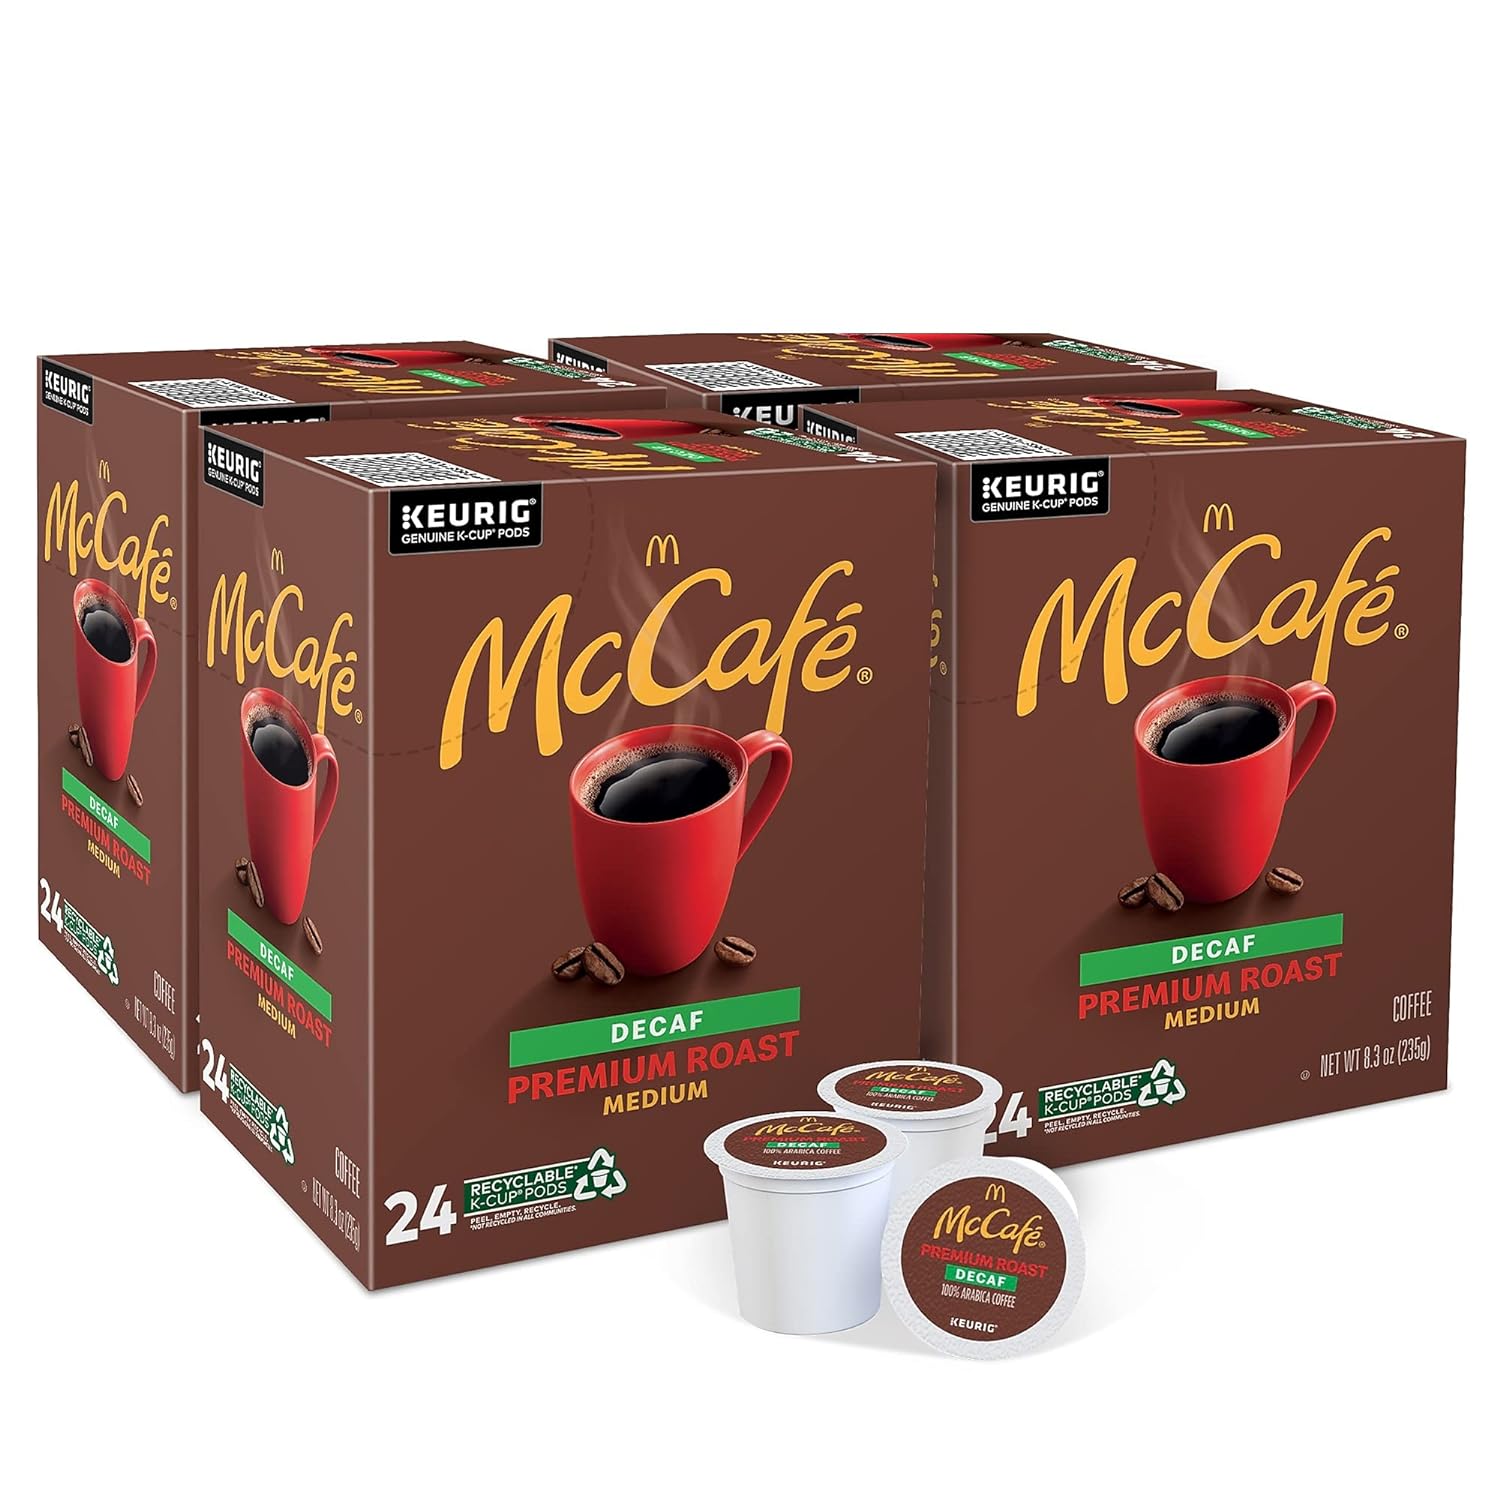 McCafe Premium Roast Decaf Coffee, Single Serve Keurig K-Cup Pods, Decaffeinated, 96 Count (4 Packs of 24)